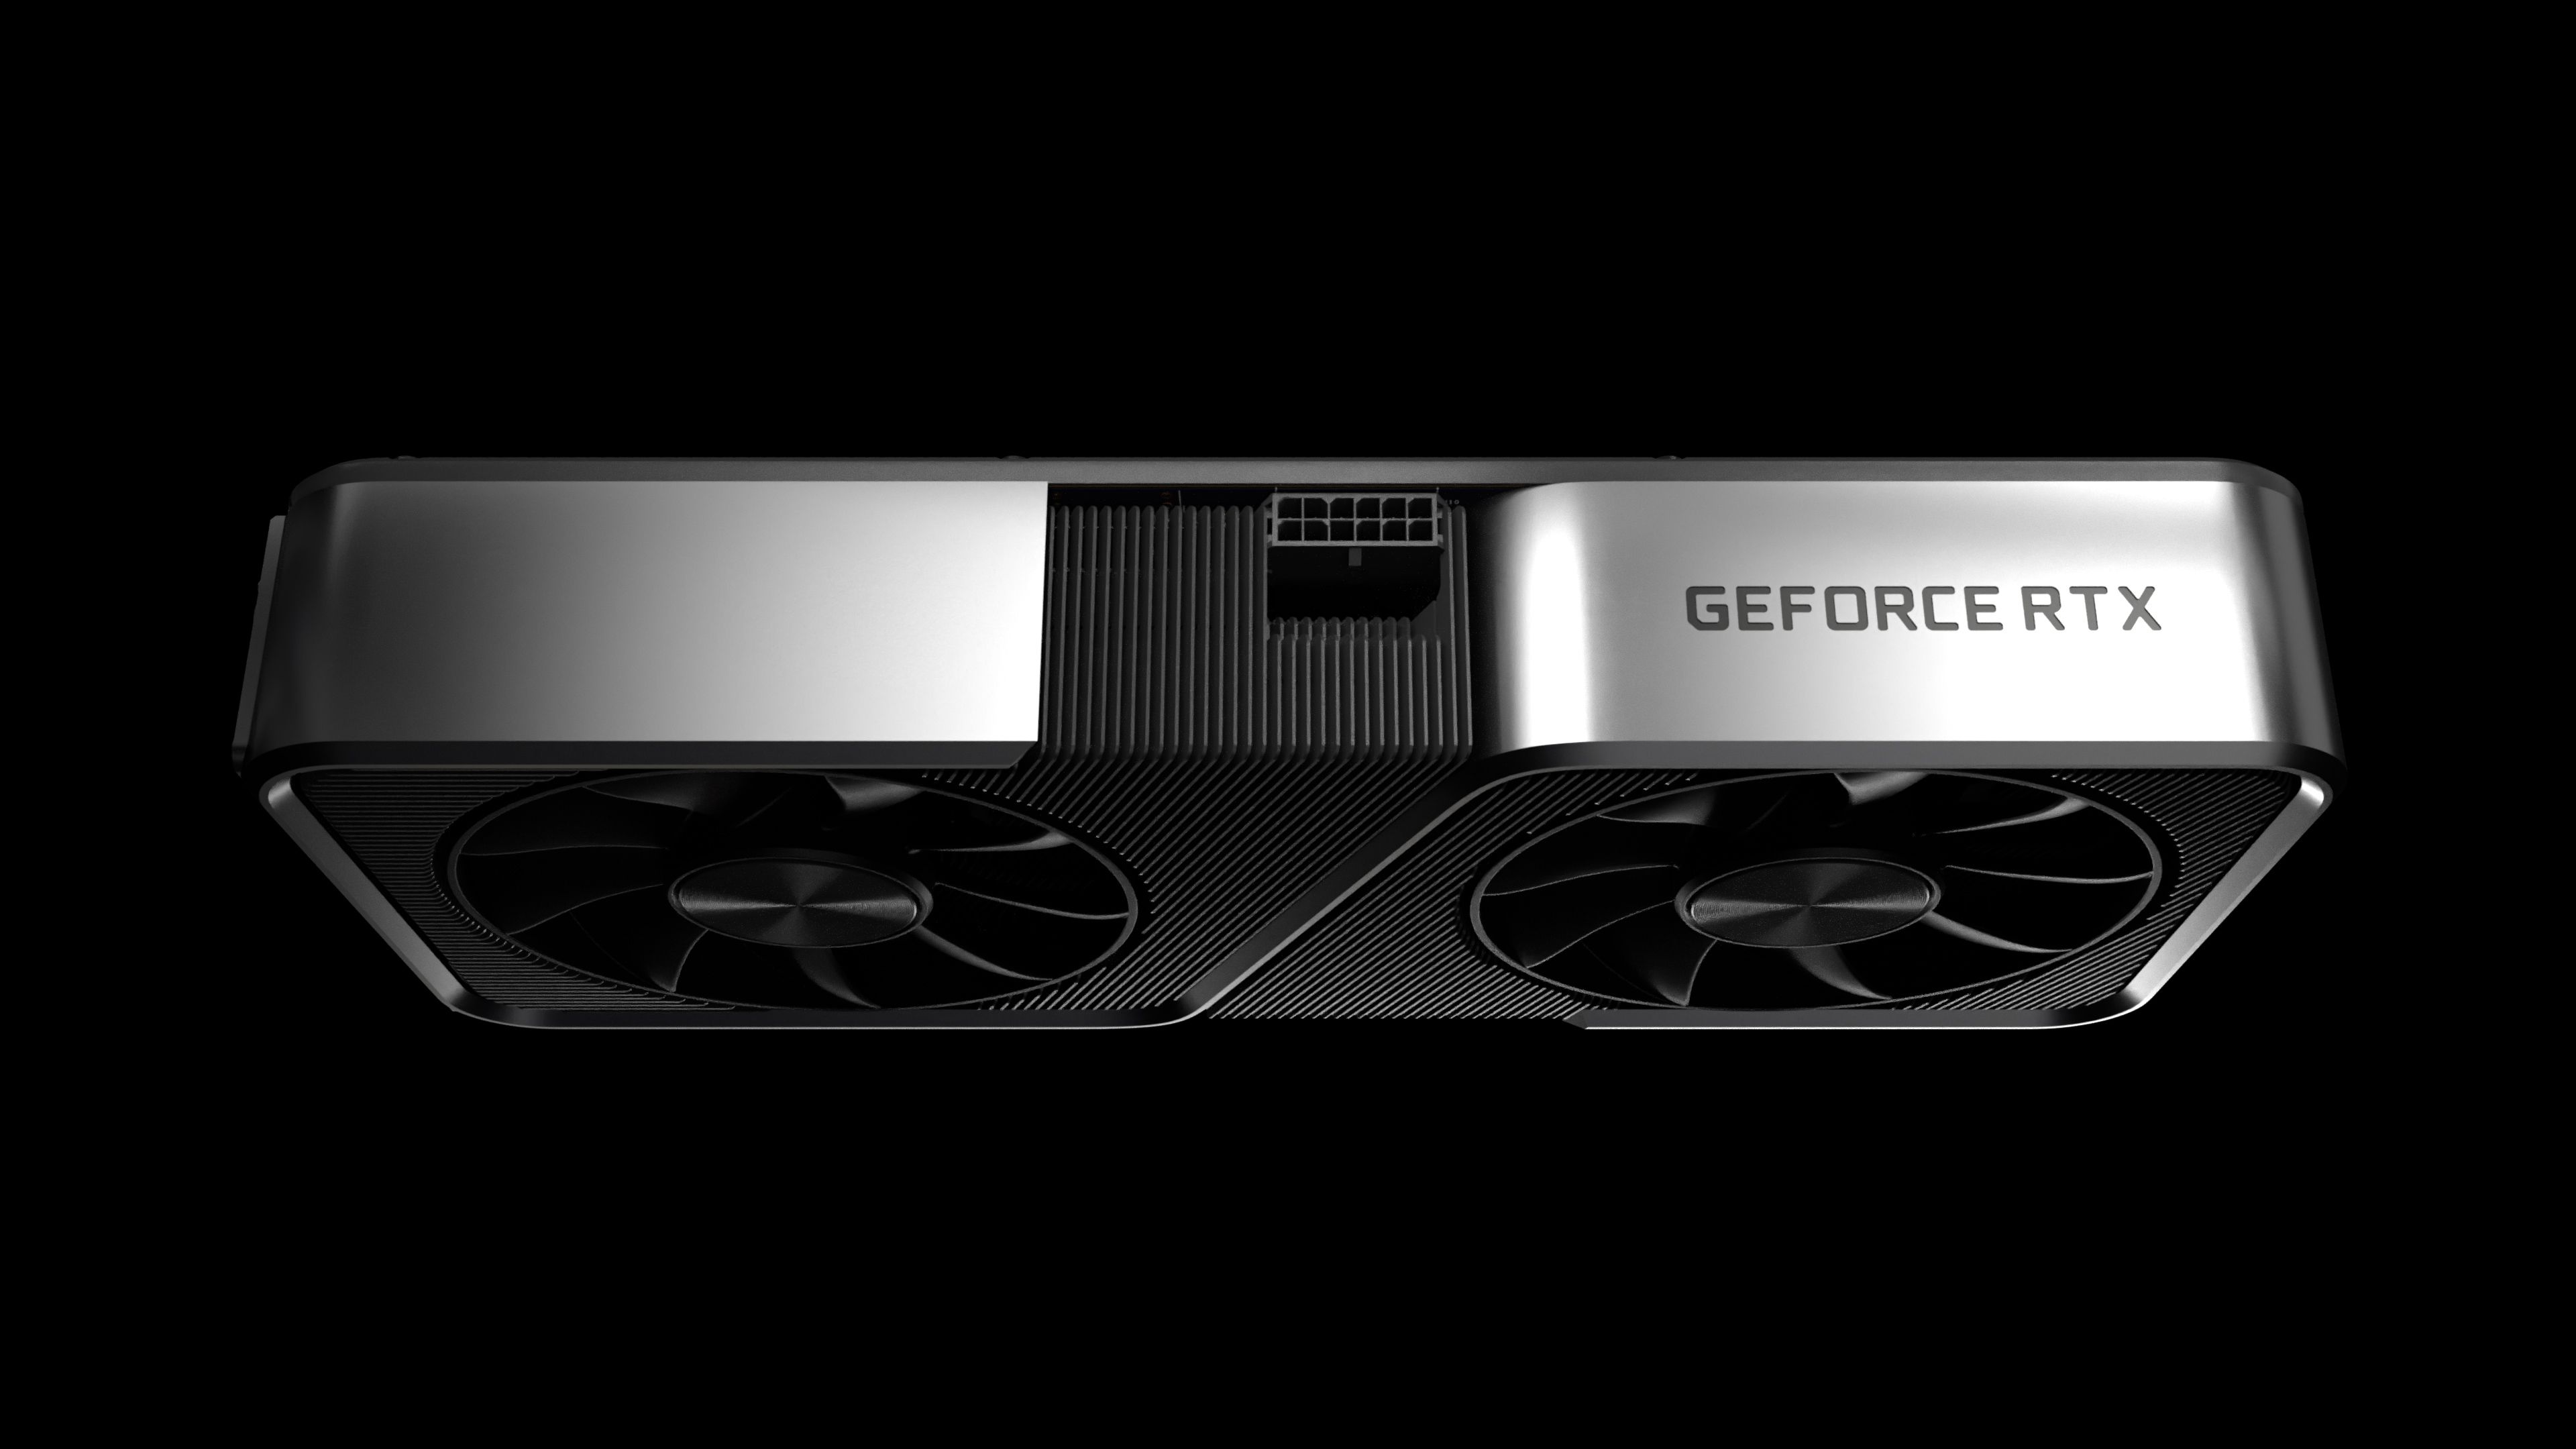 GeForce RTX 3070 graphics card